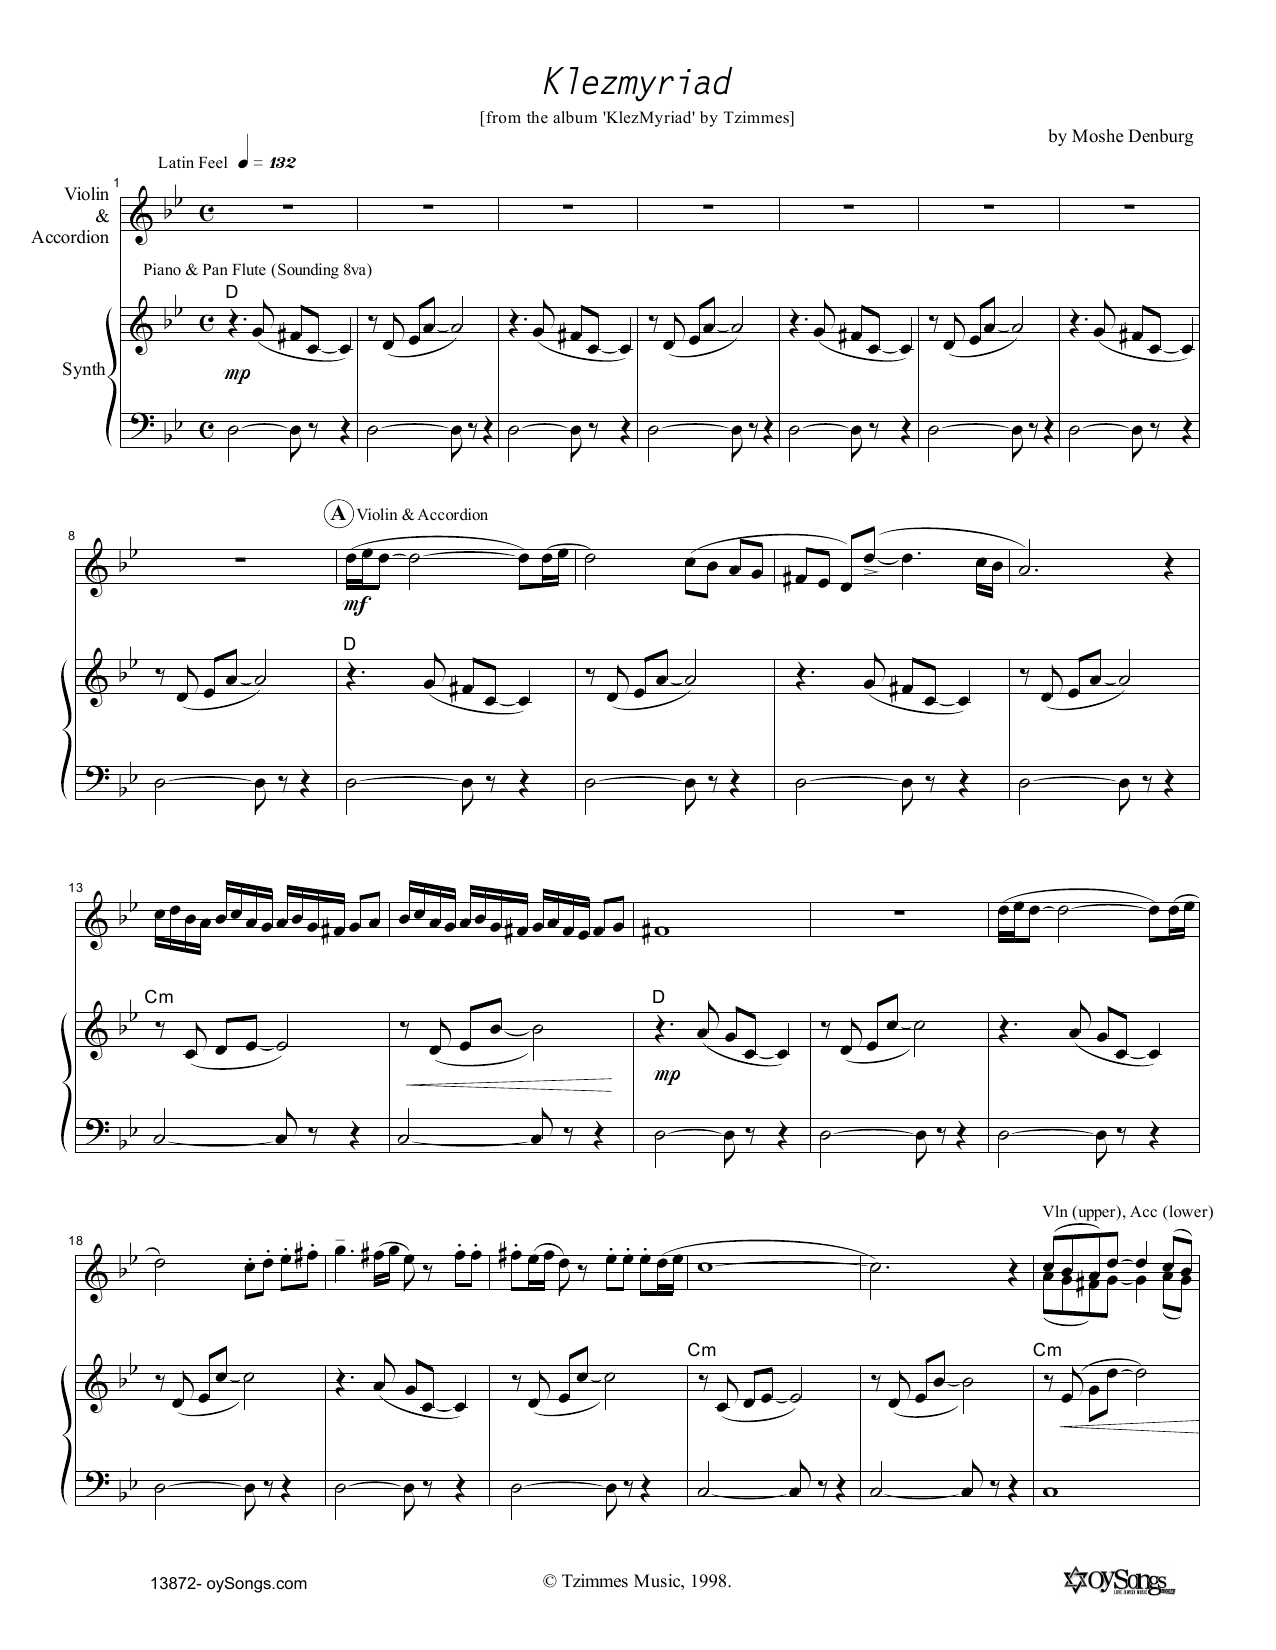 Moshe Denburg Klezmyriad Sheet Music Notes & Chords for Melody Line, Lyrics & Chords - Download or Print PDF